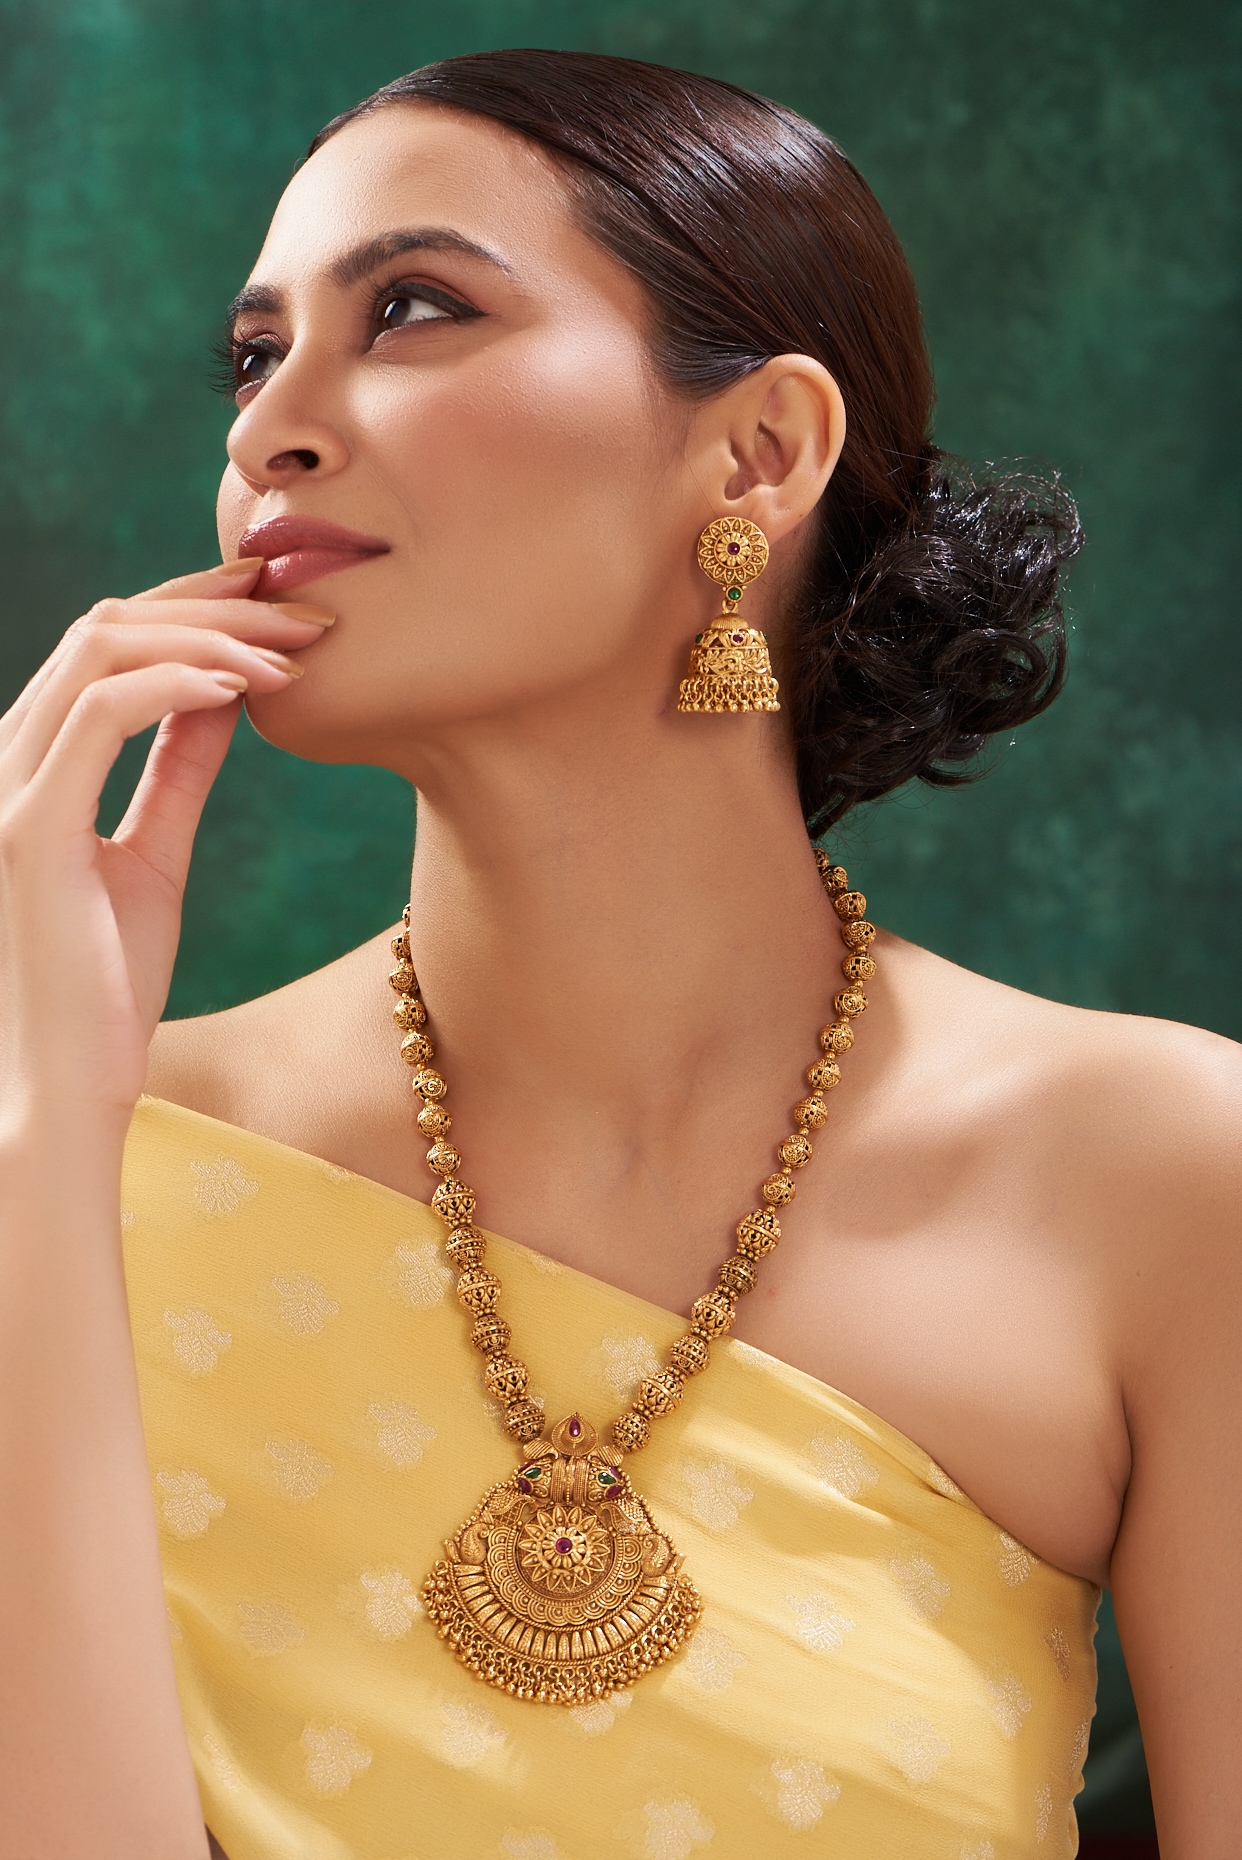 Massive Jewelry on Female Body in Indian Dress Stock Photo - Image of  female, ethnic: 164274094